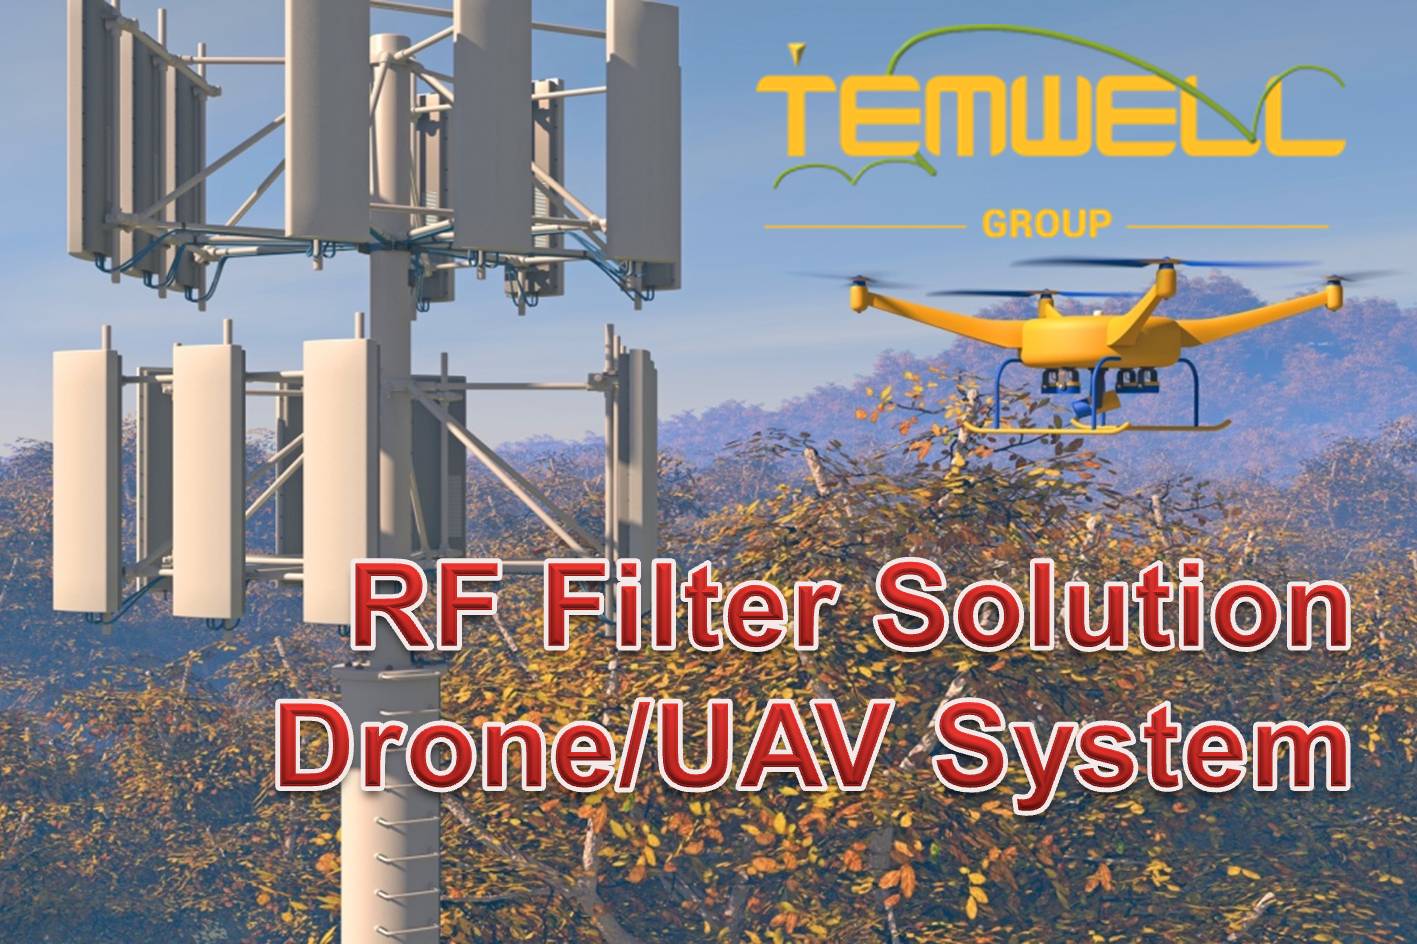 proimages/featured/drone-uav-system/drone-uav-system4.jpg